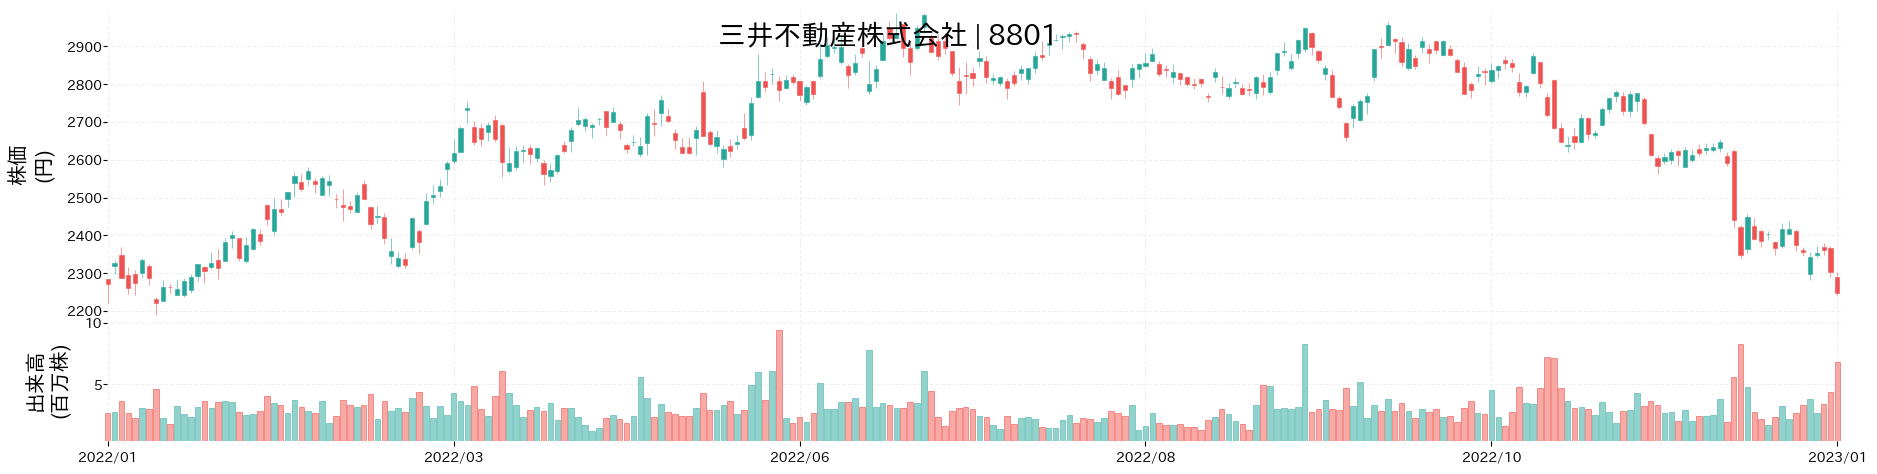 三井不動産の株価推移(2022)